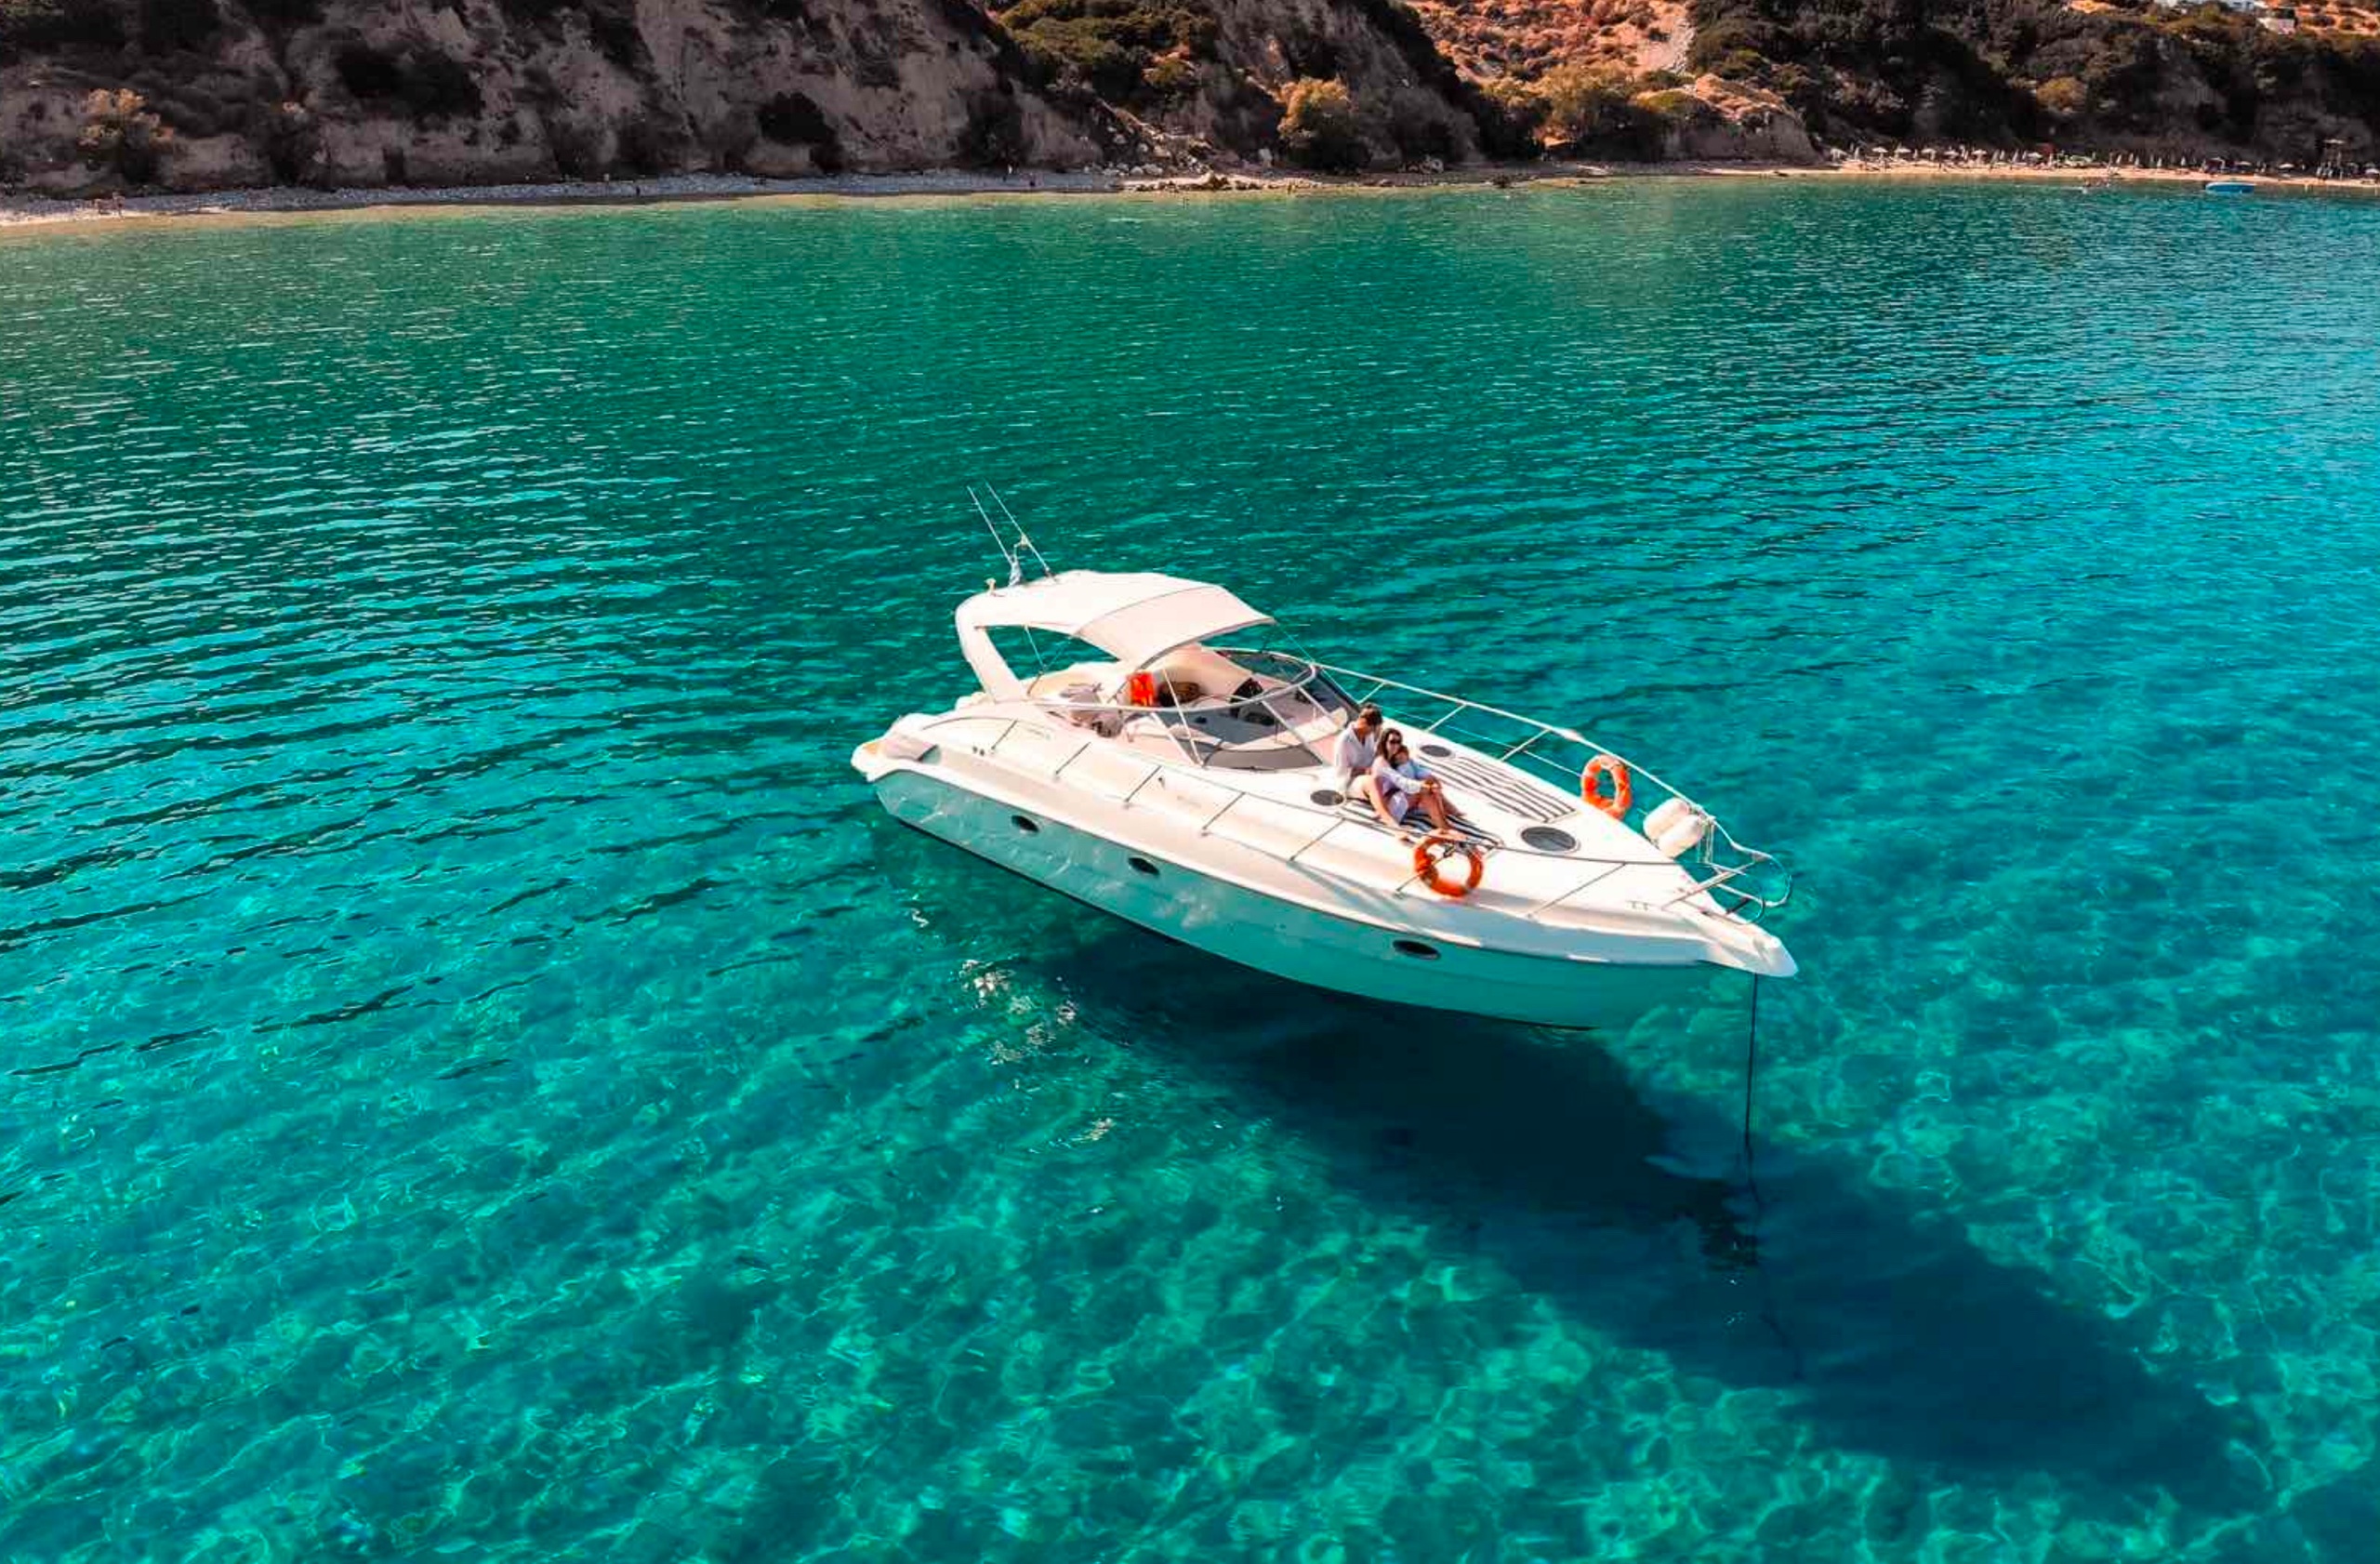 Yacht Charter to Mirabello in Crete